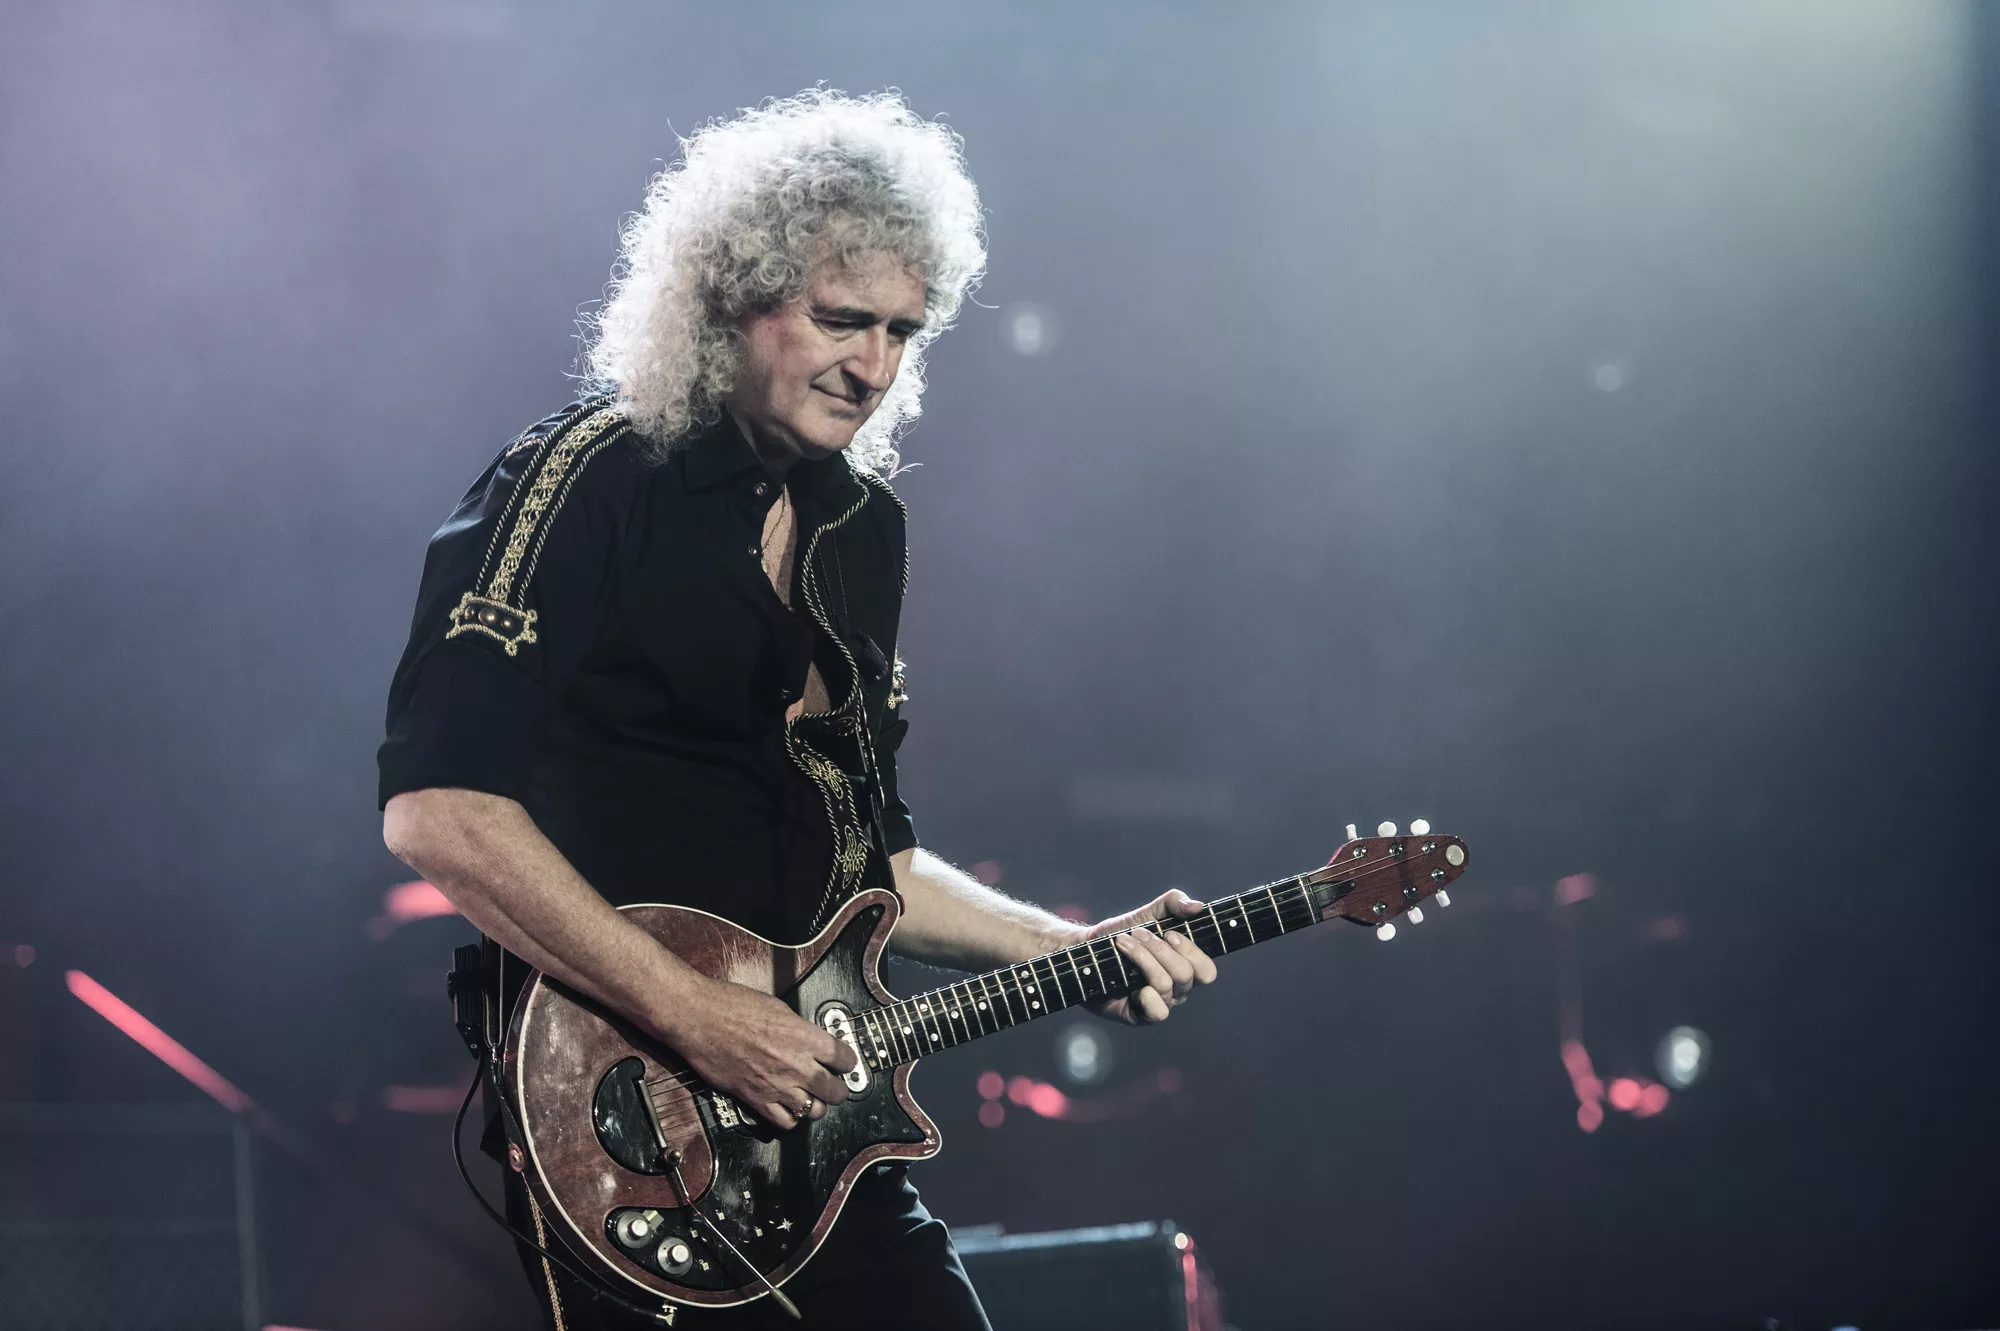 Queen-guitarist skeptisk over for dansk rumforsknings-studie